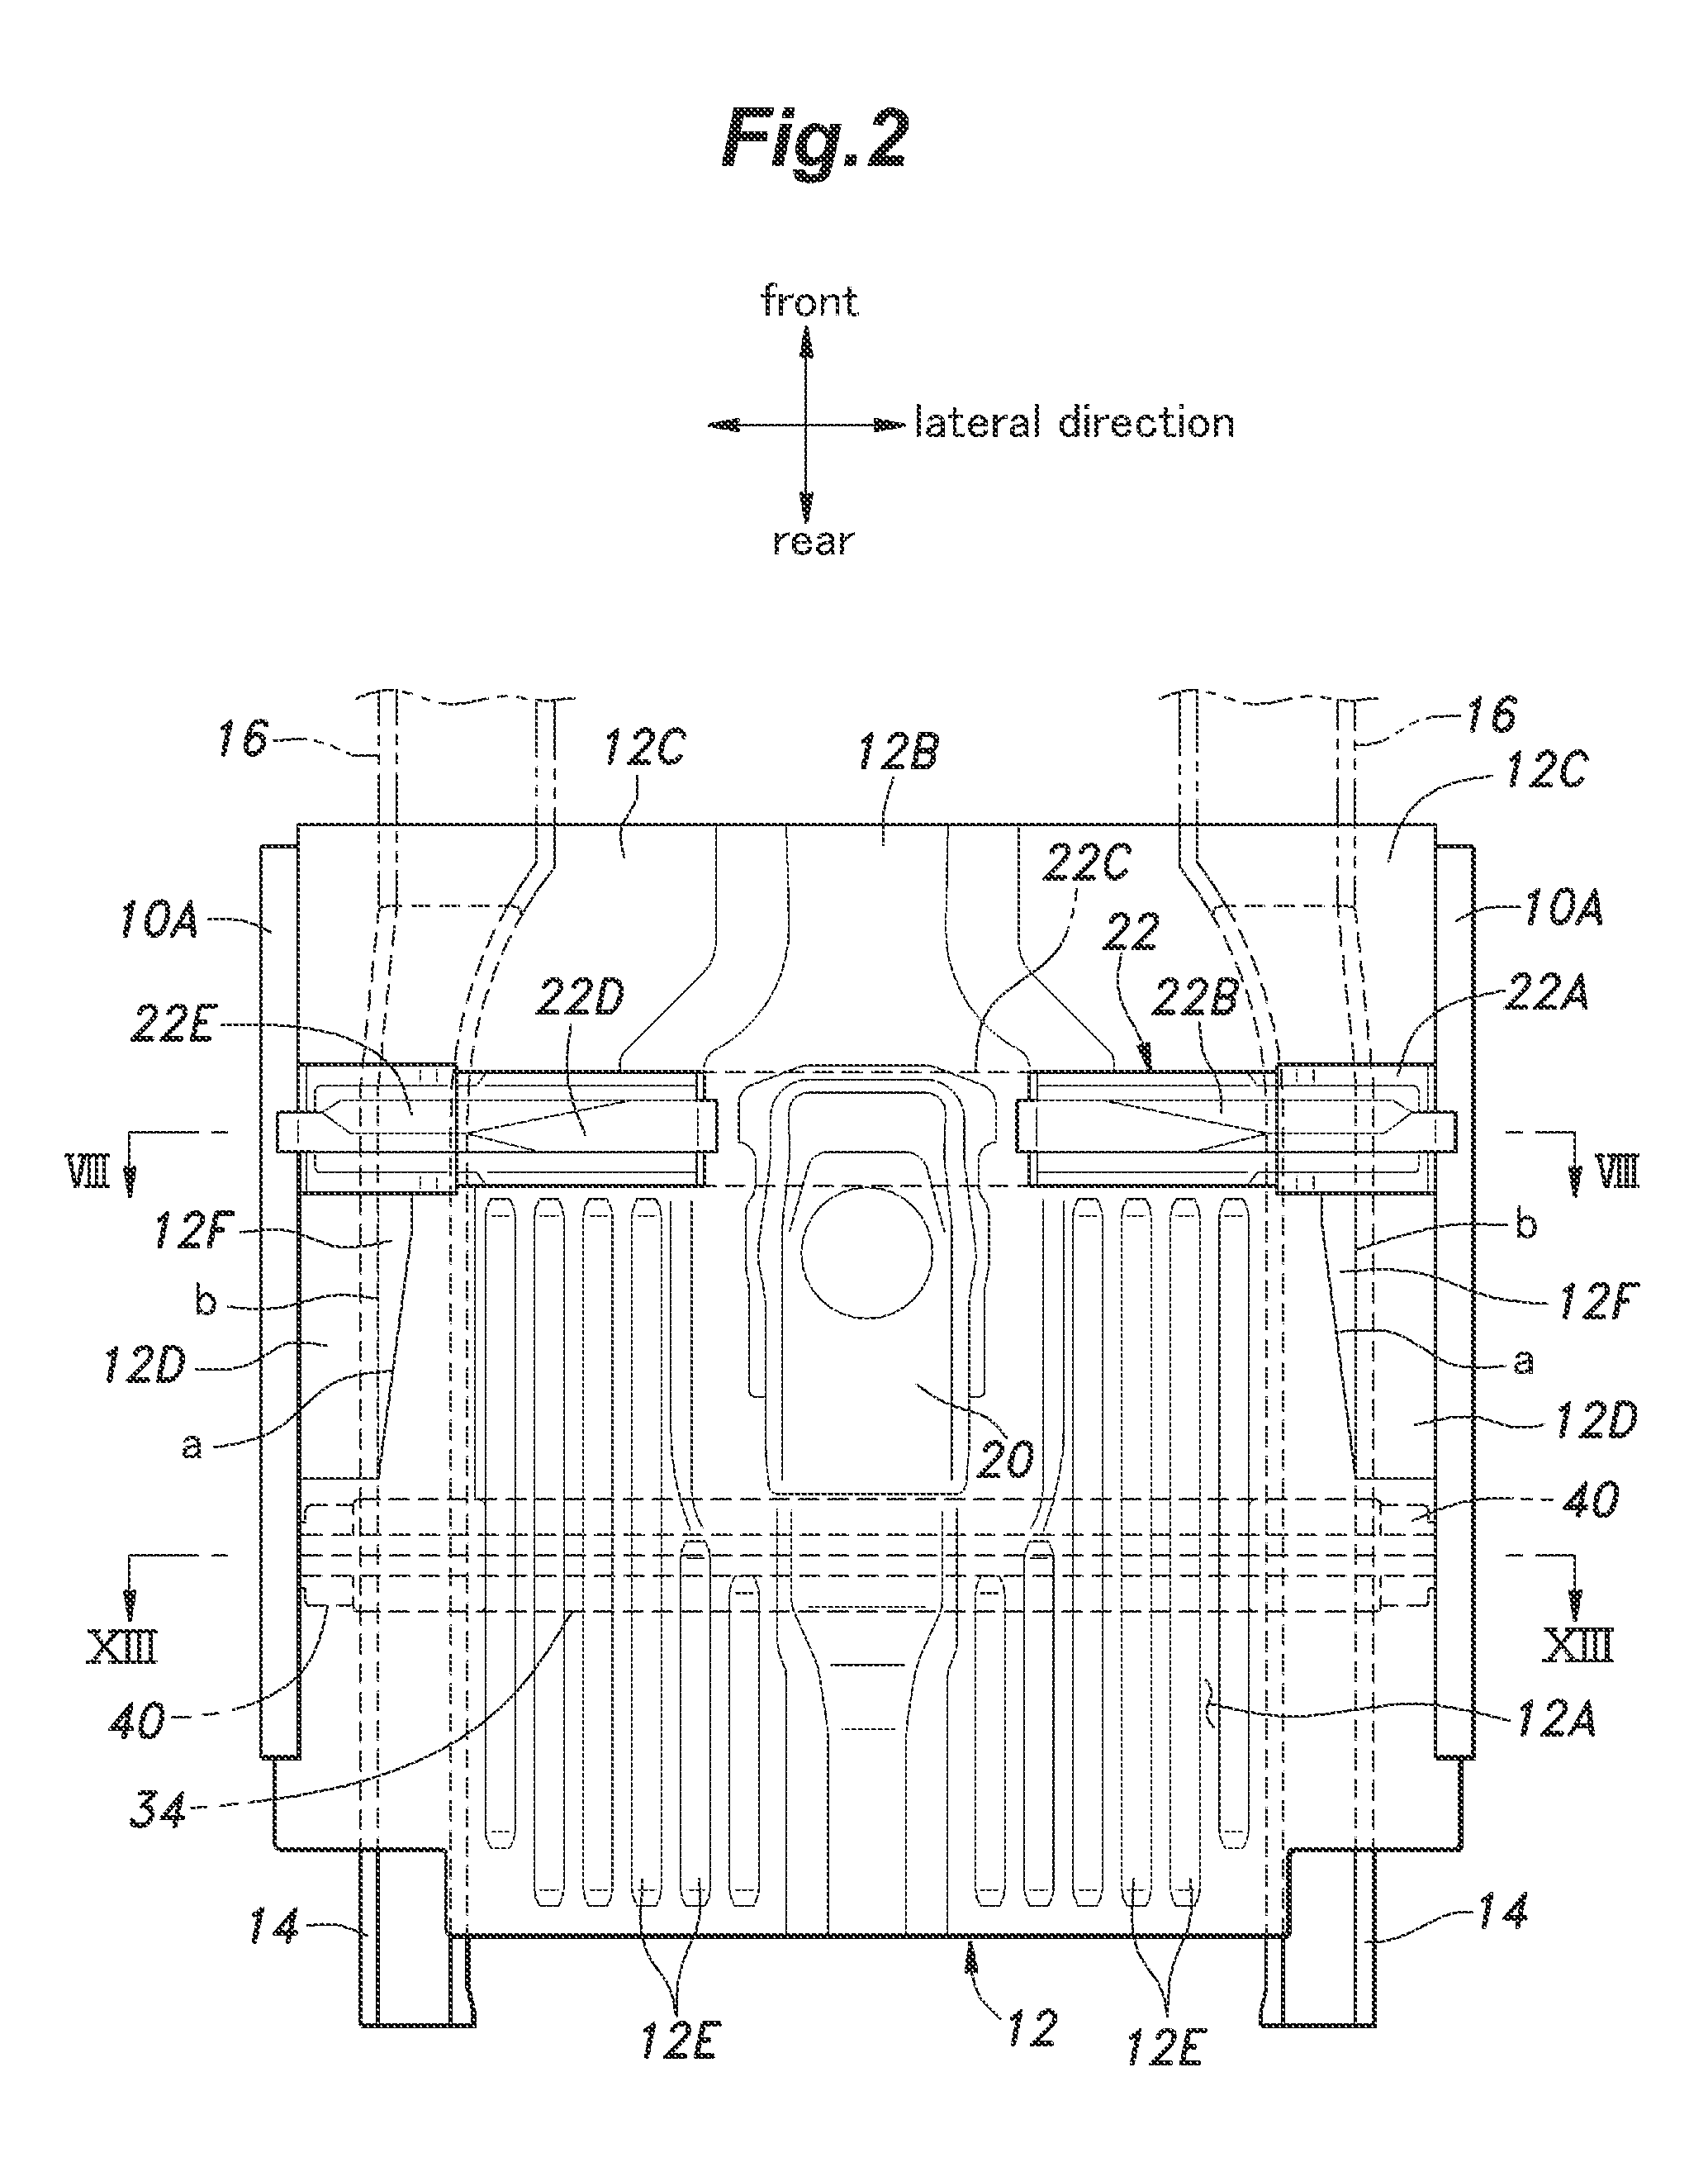 Automotive floor structure